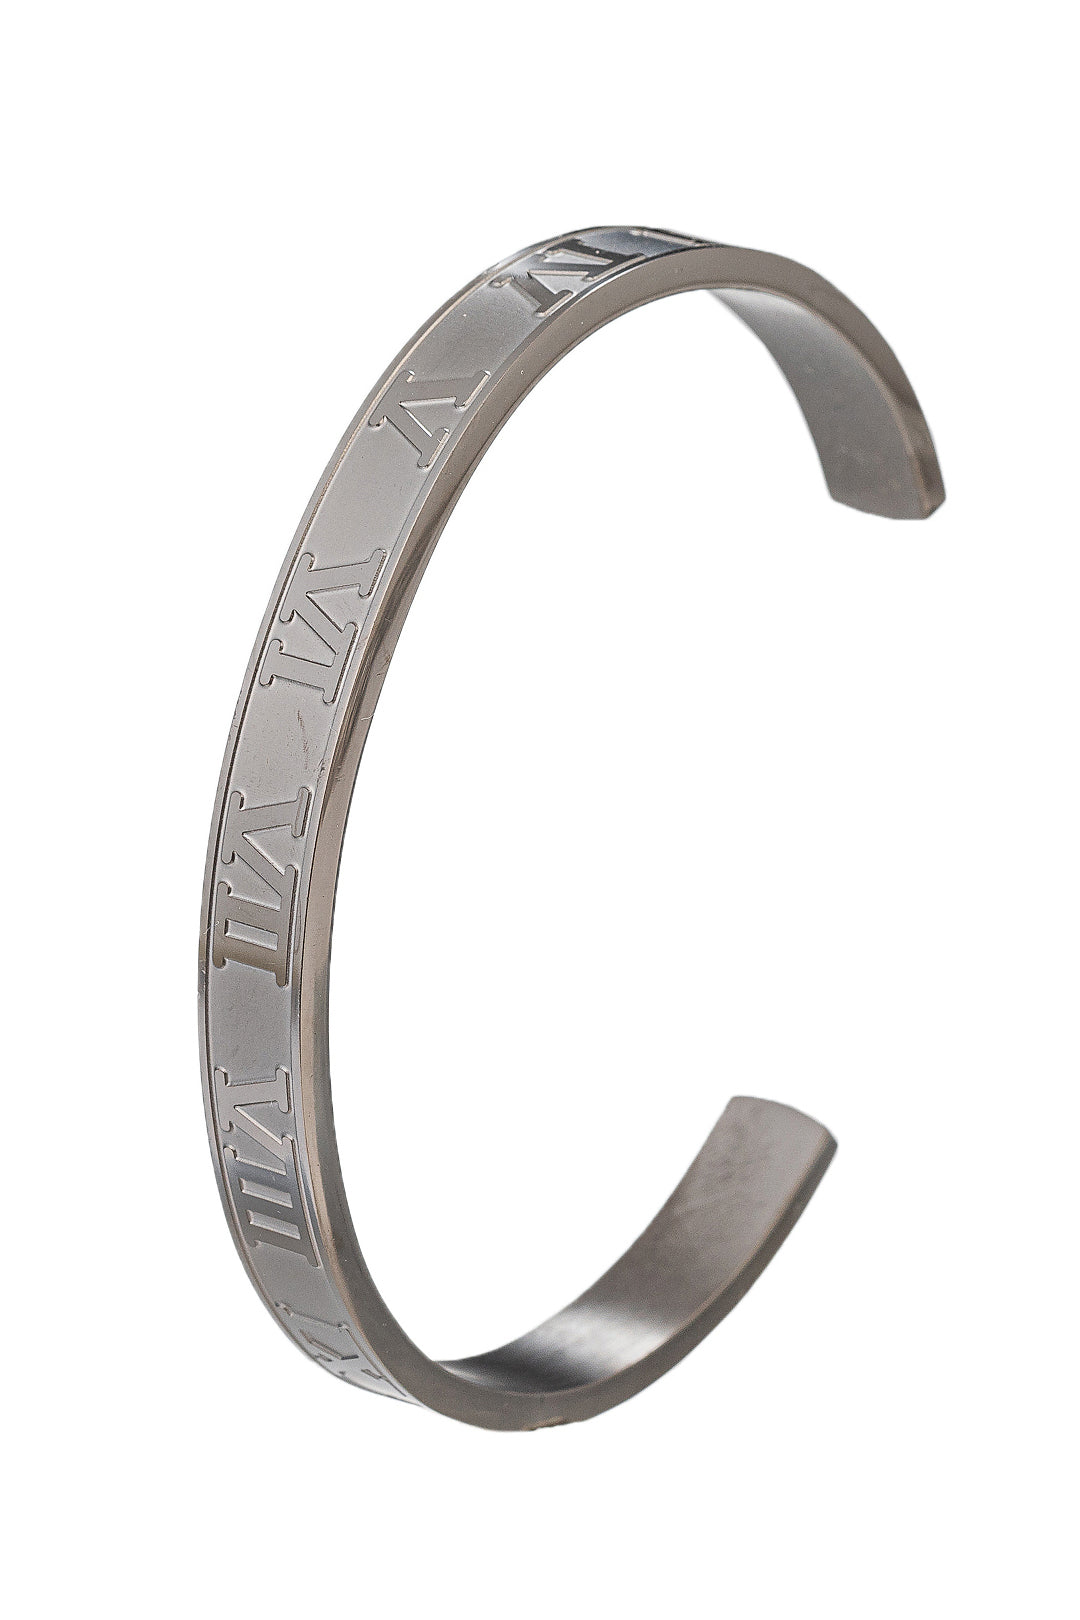 Roman Numerals Bangles Bracelet | Stainless Steel Roman Bangles - Hollow  Bracelets - Aliexpress